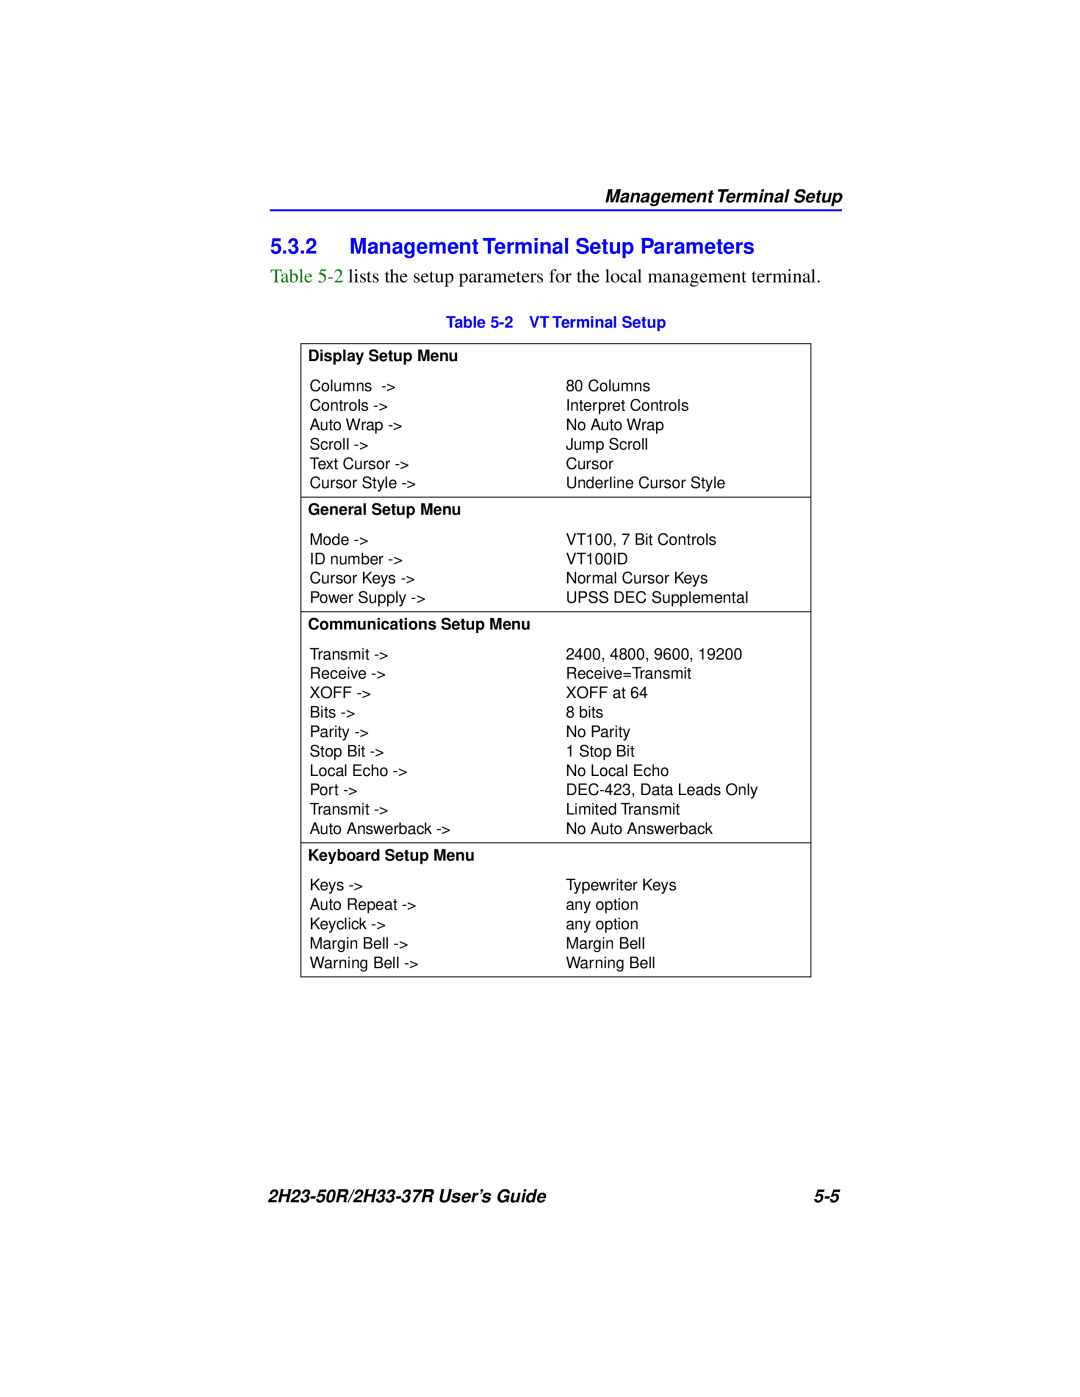 Cabletron Systems manual Management Terminal Setup Parameters, 2H23-50R/2H33-37R User’s Guide, 2 VT Terminal Setup 